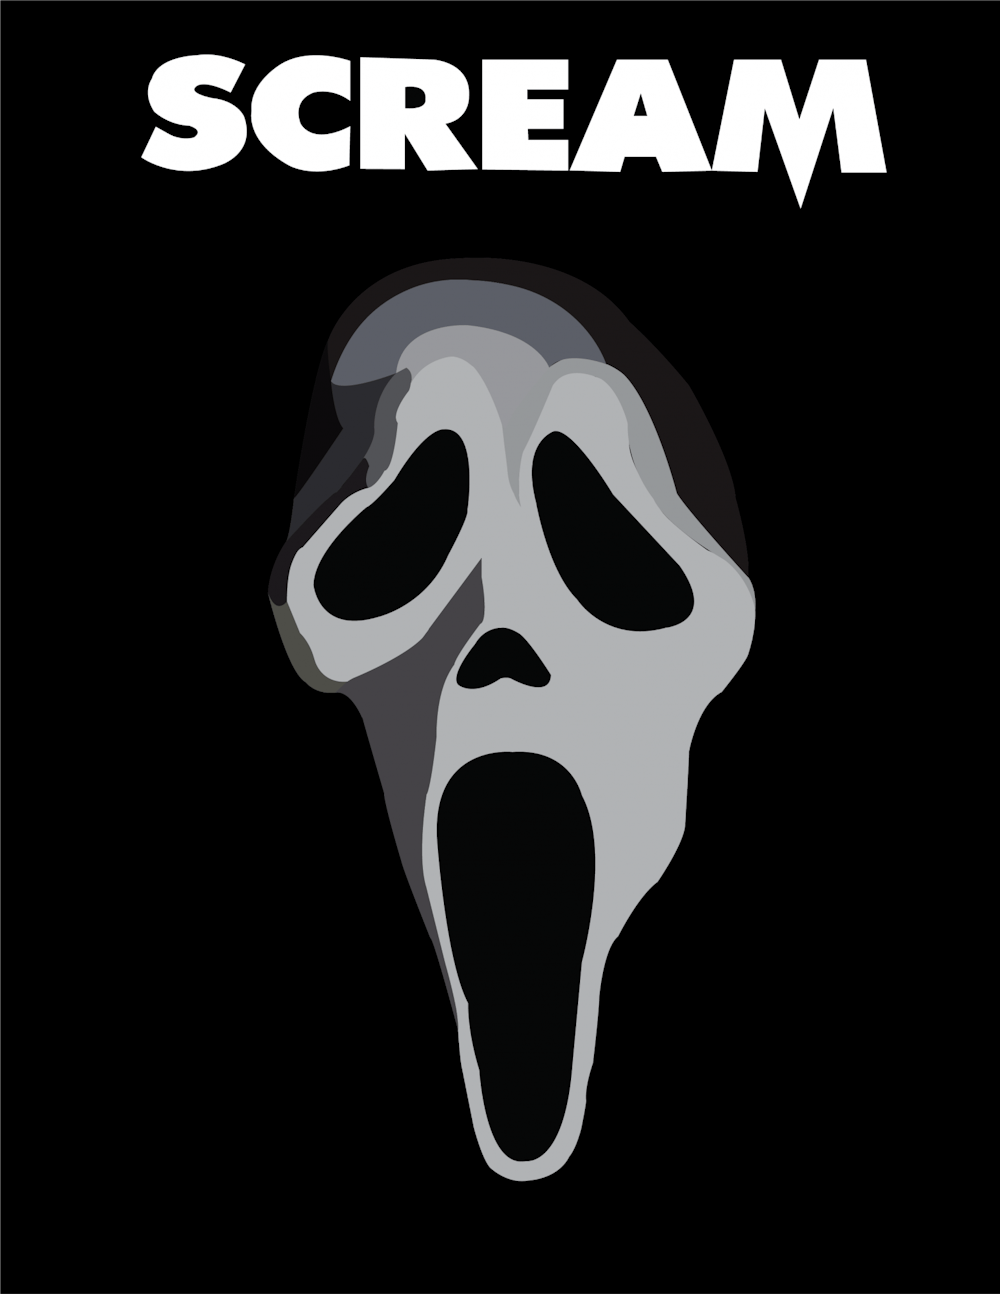 Scream (2).png